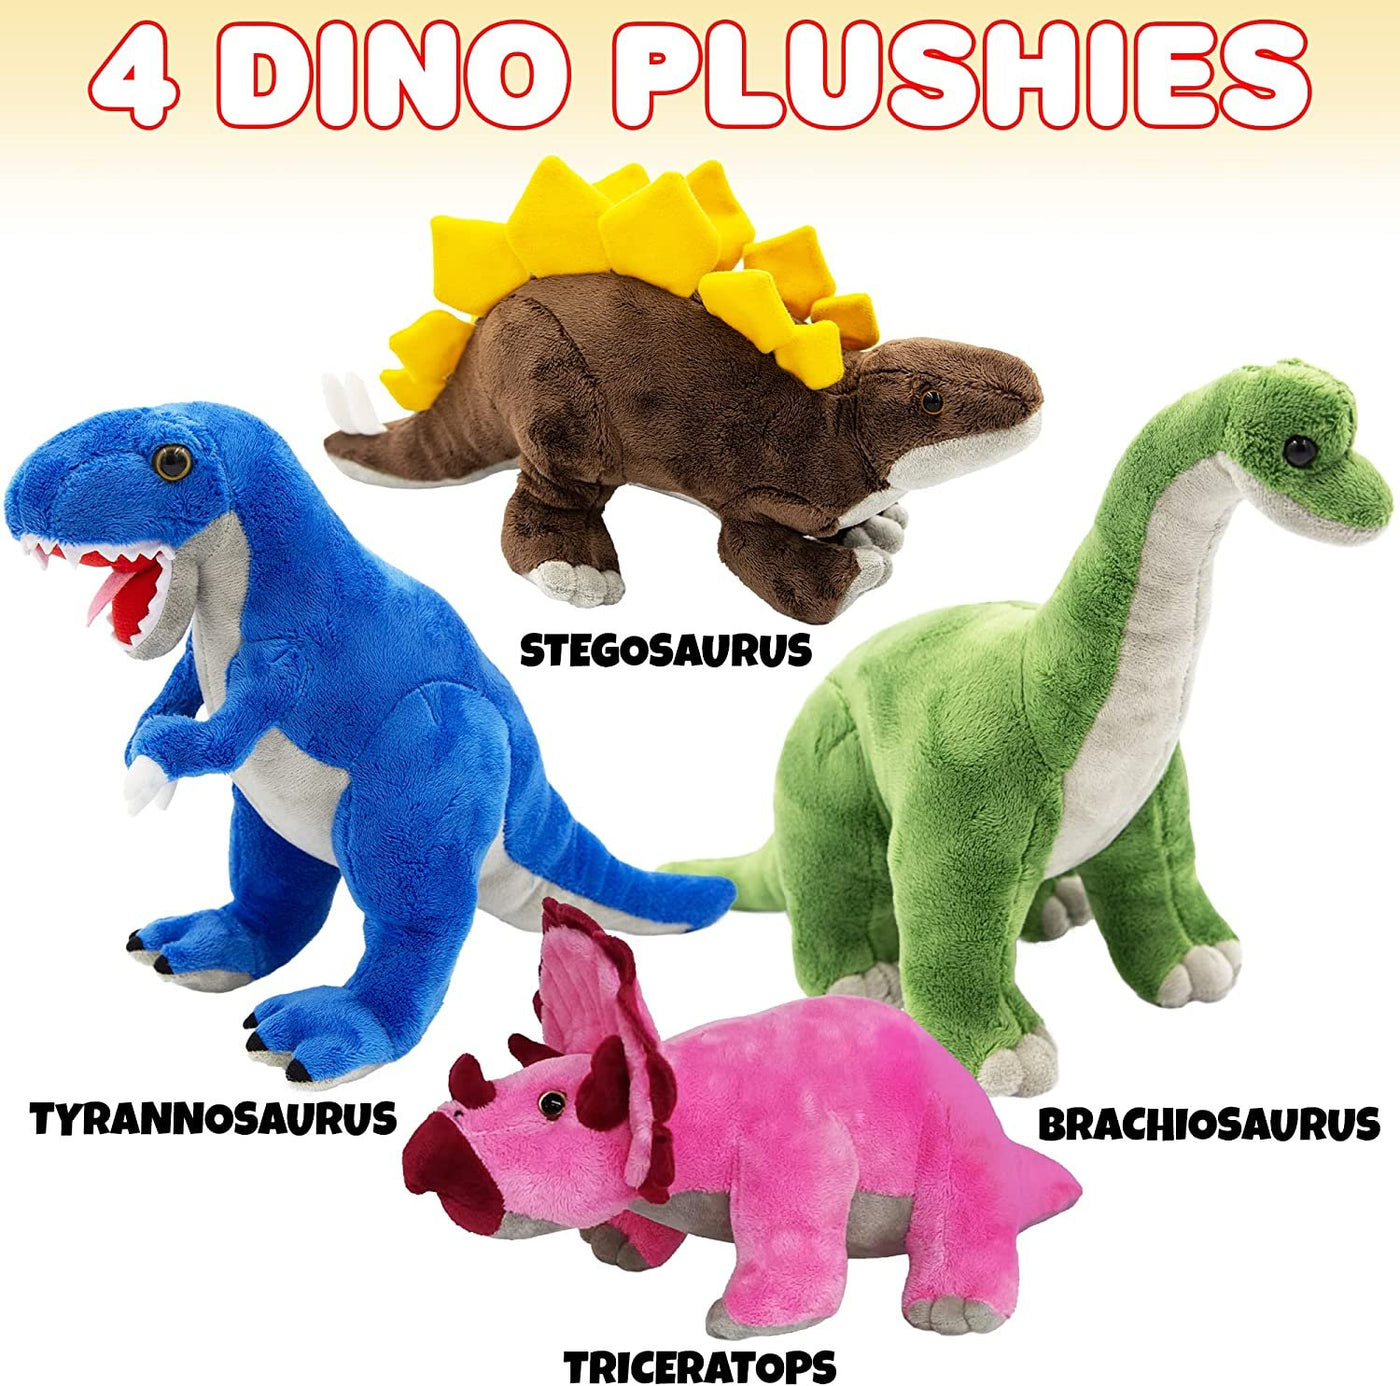 Plush Dinosaur Stuffed Animals for Kids, Set of 4, Stuffed Dinosaur Plushy for Boys and Girls Ages 3+, Plush Animals Dinosaur Toys For Kids, Dino Plush Easter Dinosaur Plush Party Favors